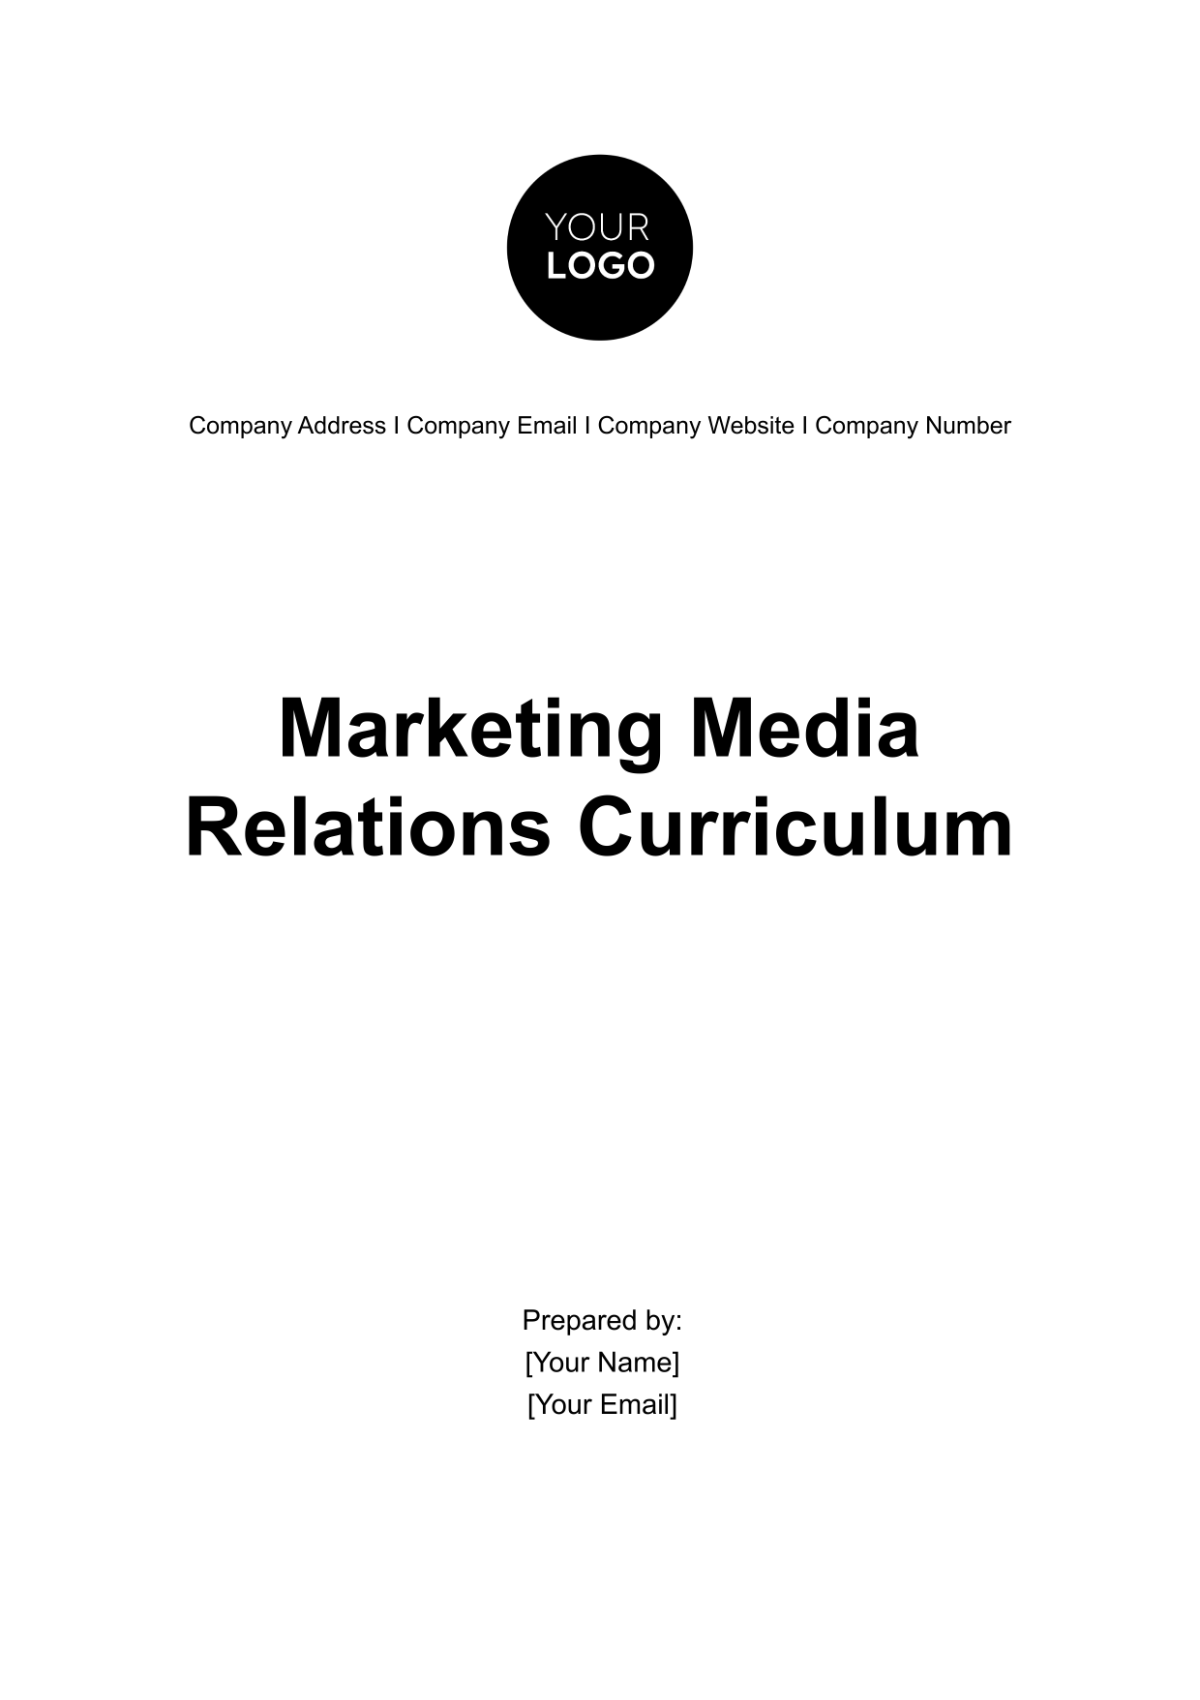 Marketing Media Relations Curriculum Template